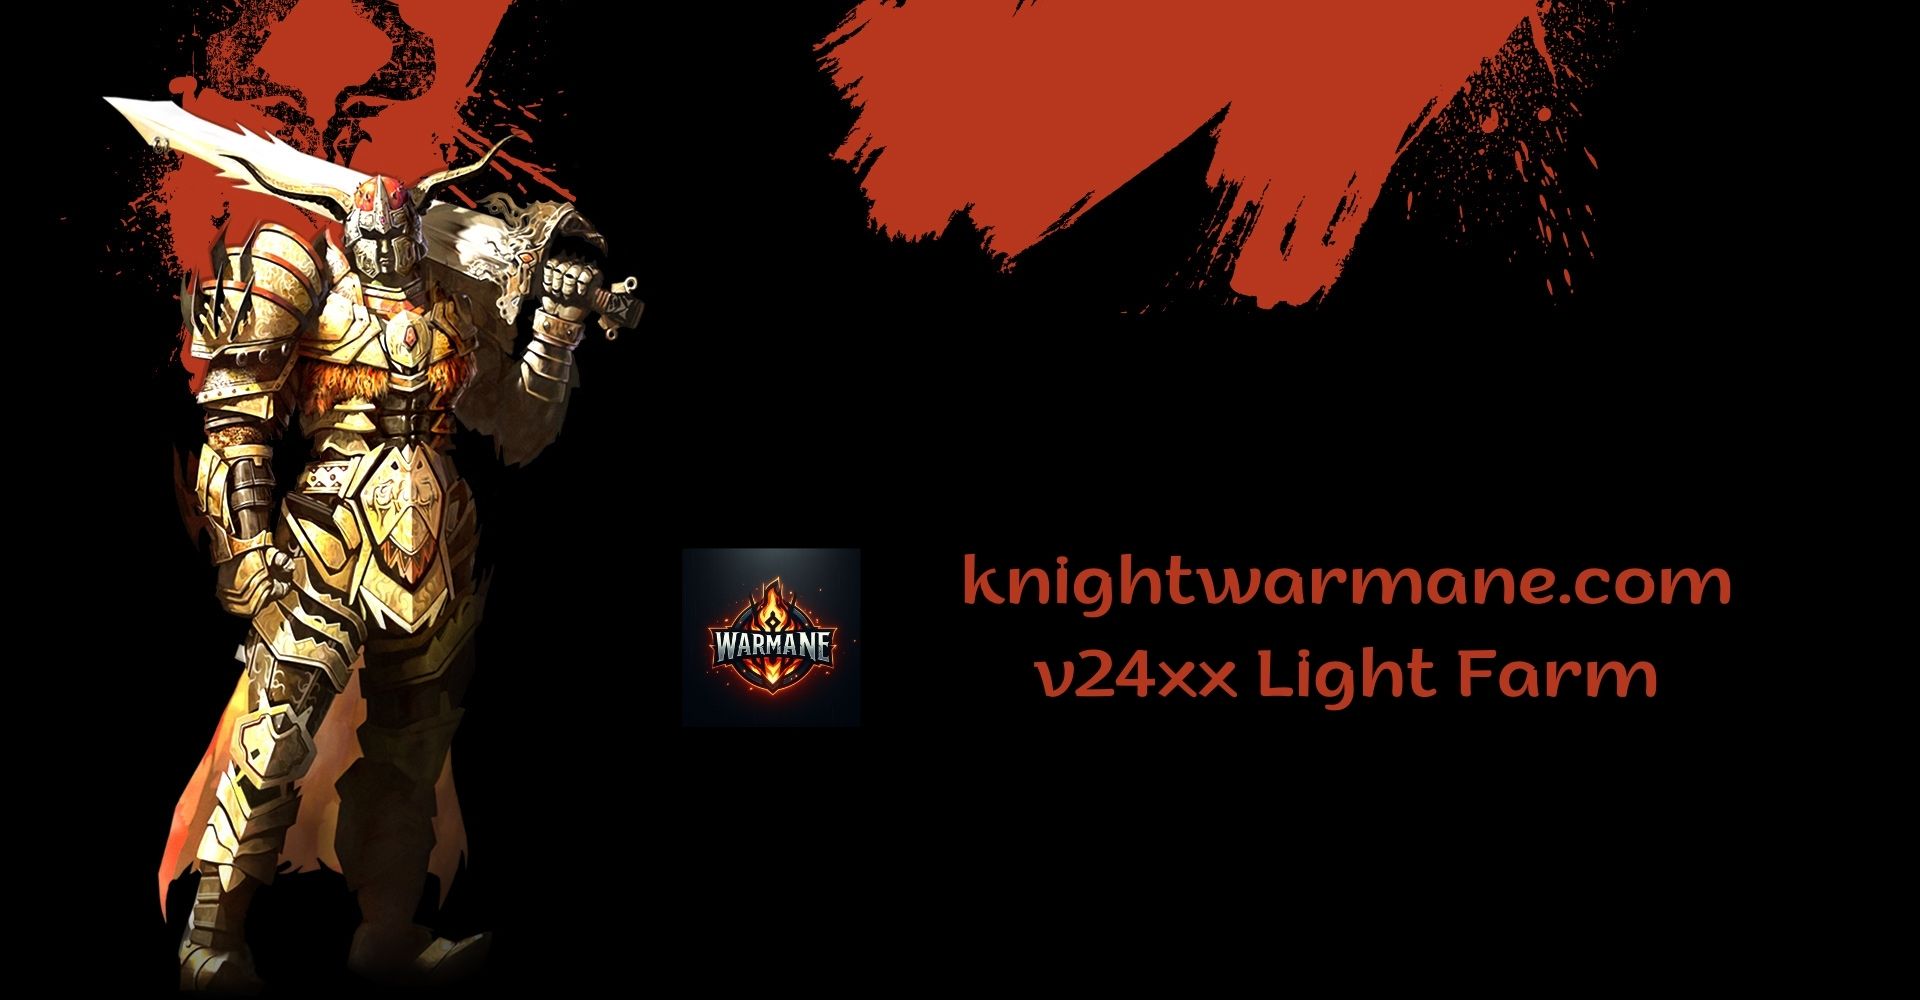 knightwarmane.com.jpg